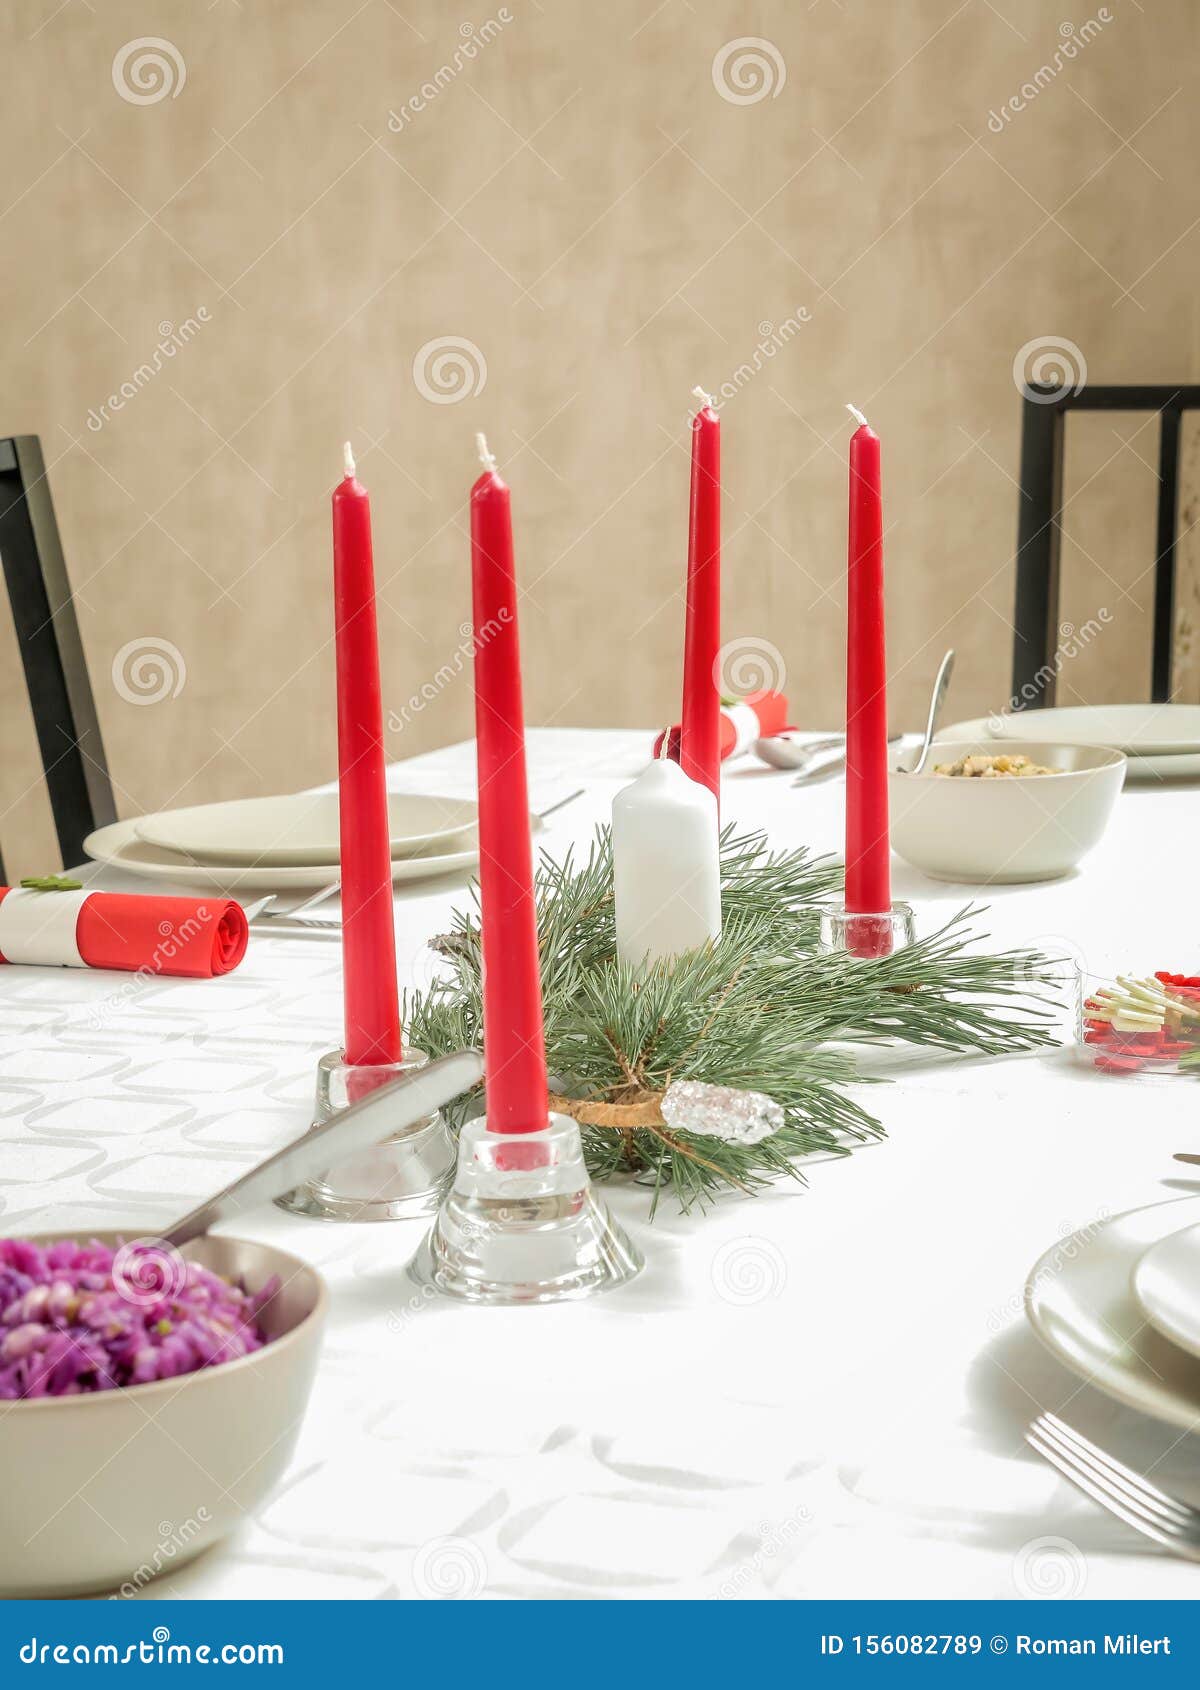 Traditional Polish Christmas Eve Table Stock Image - Image of dishes ...